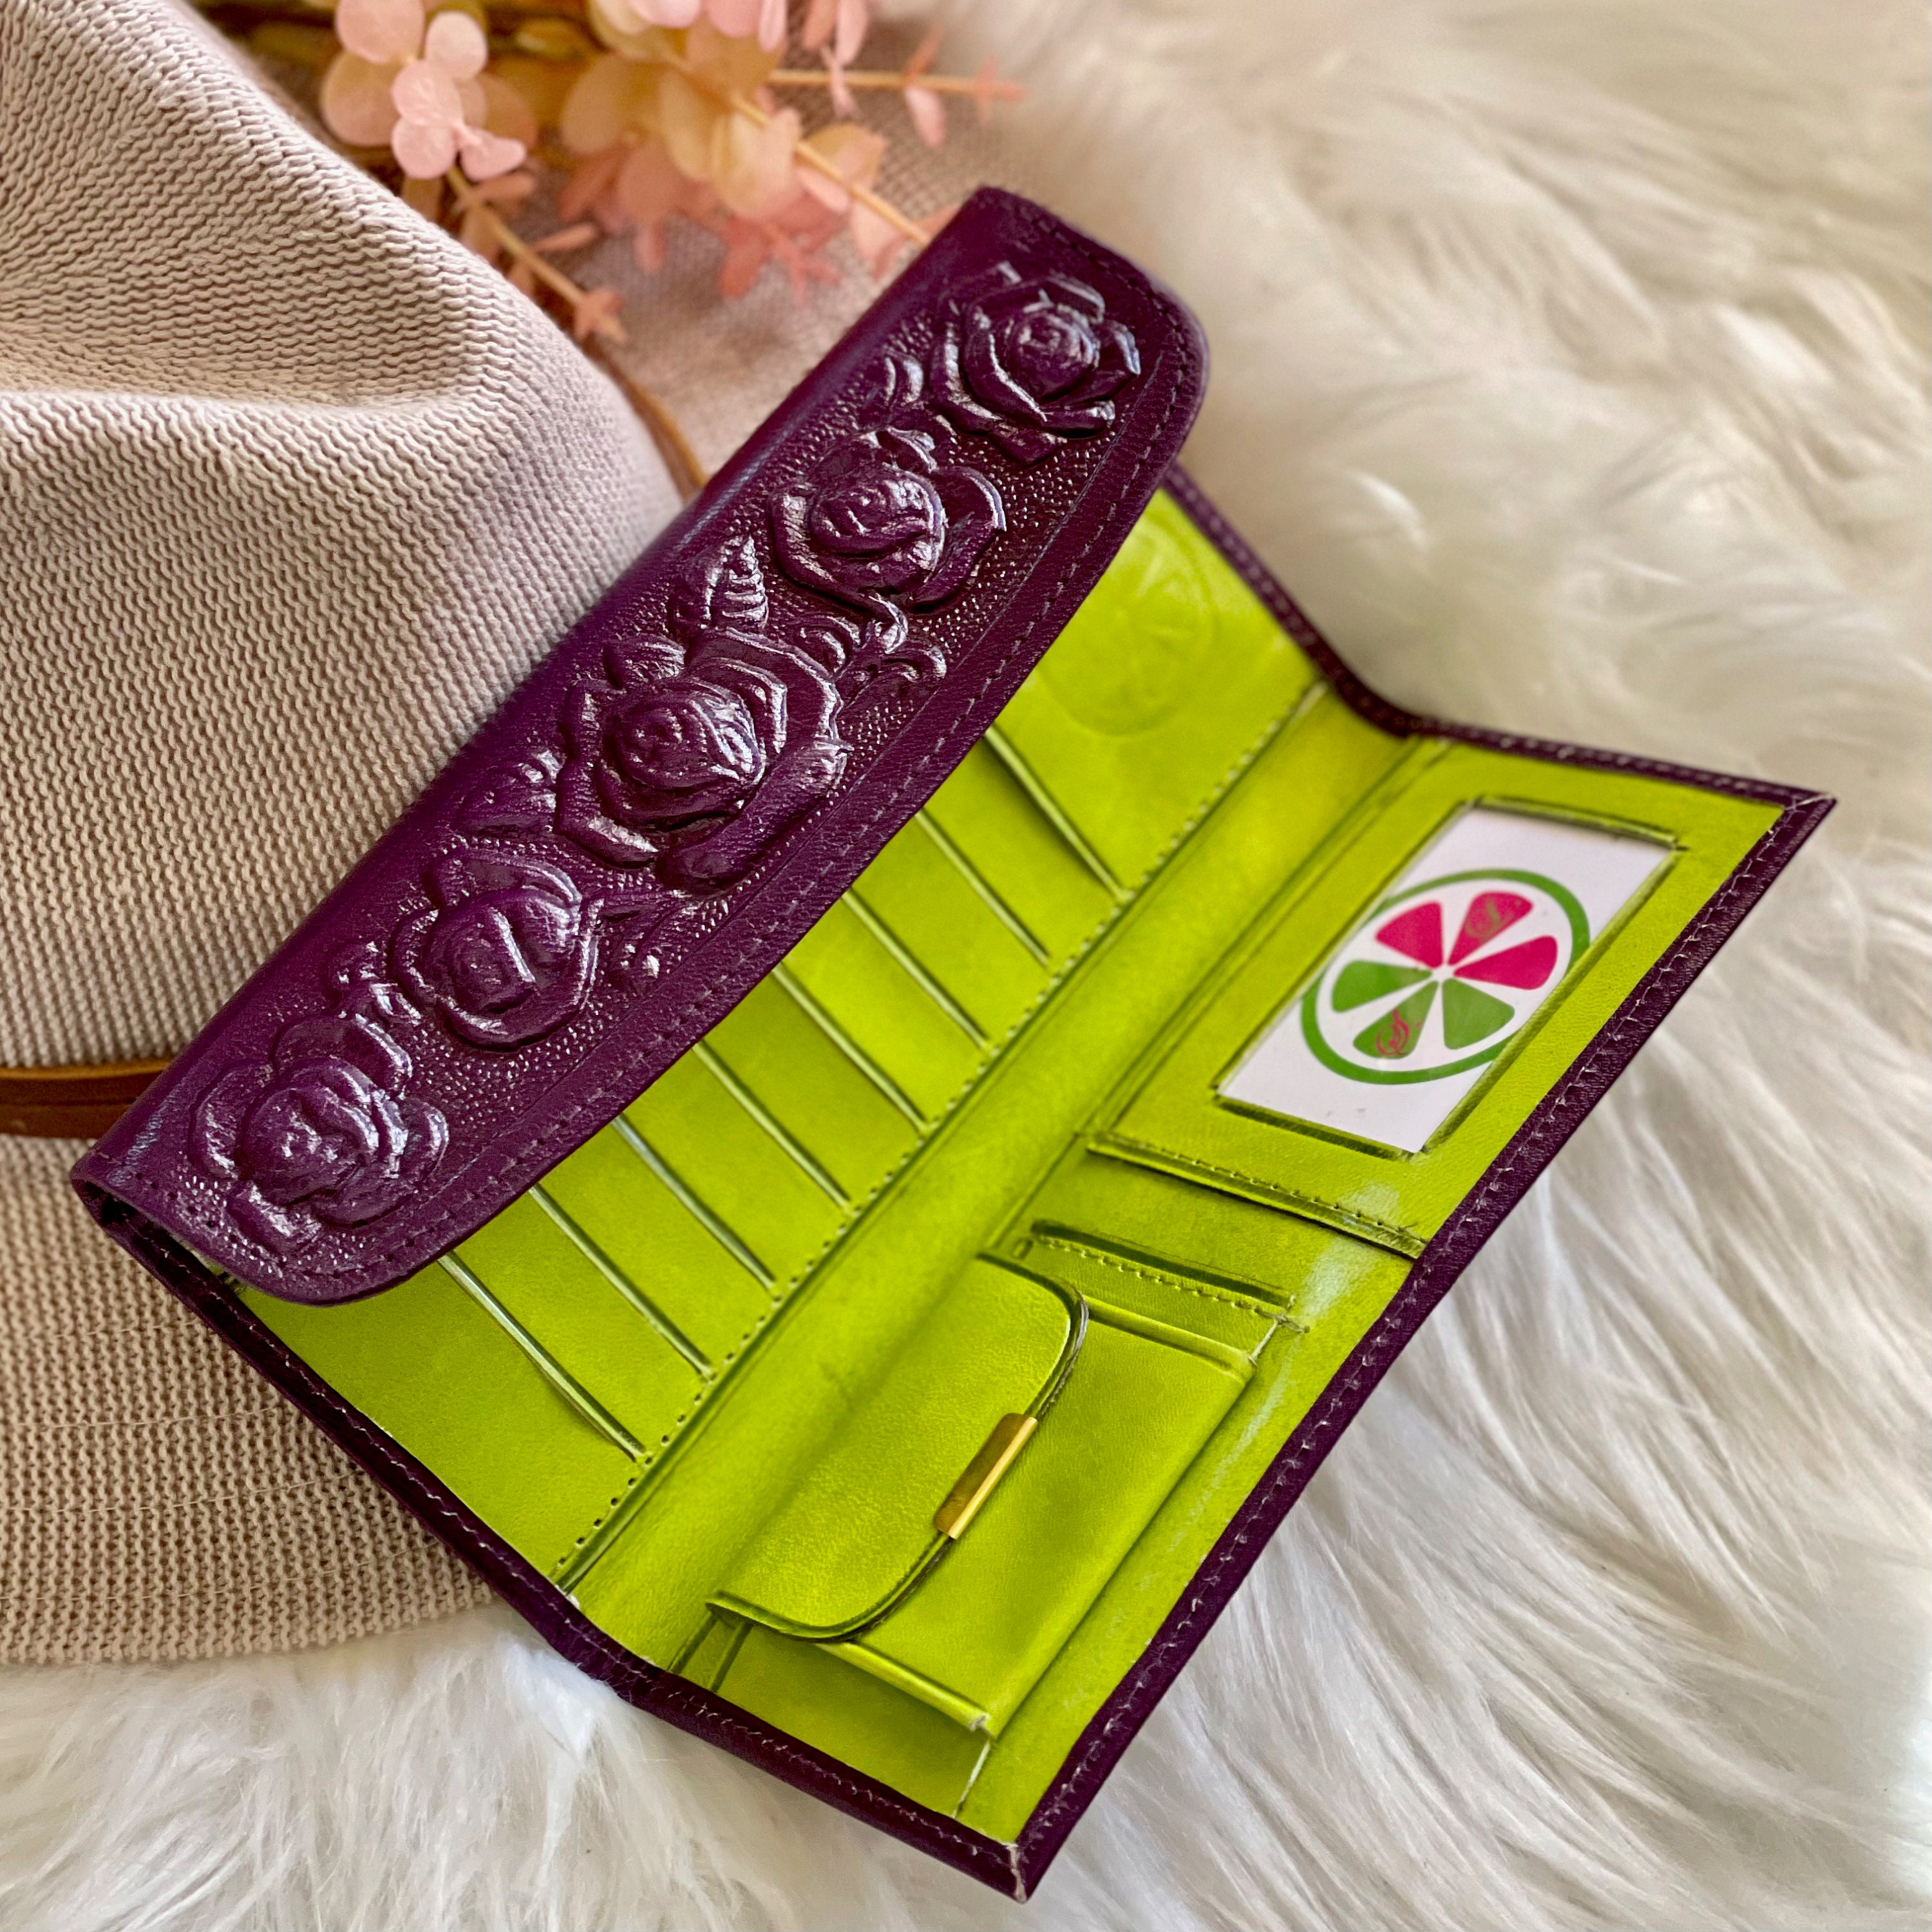 Daisy Rose Trifold RFID Blocking Wallet - PU Vegan Leather Multi Card  Holder Organizer Small - Cream checkered